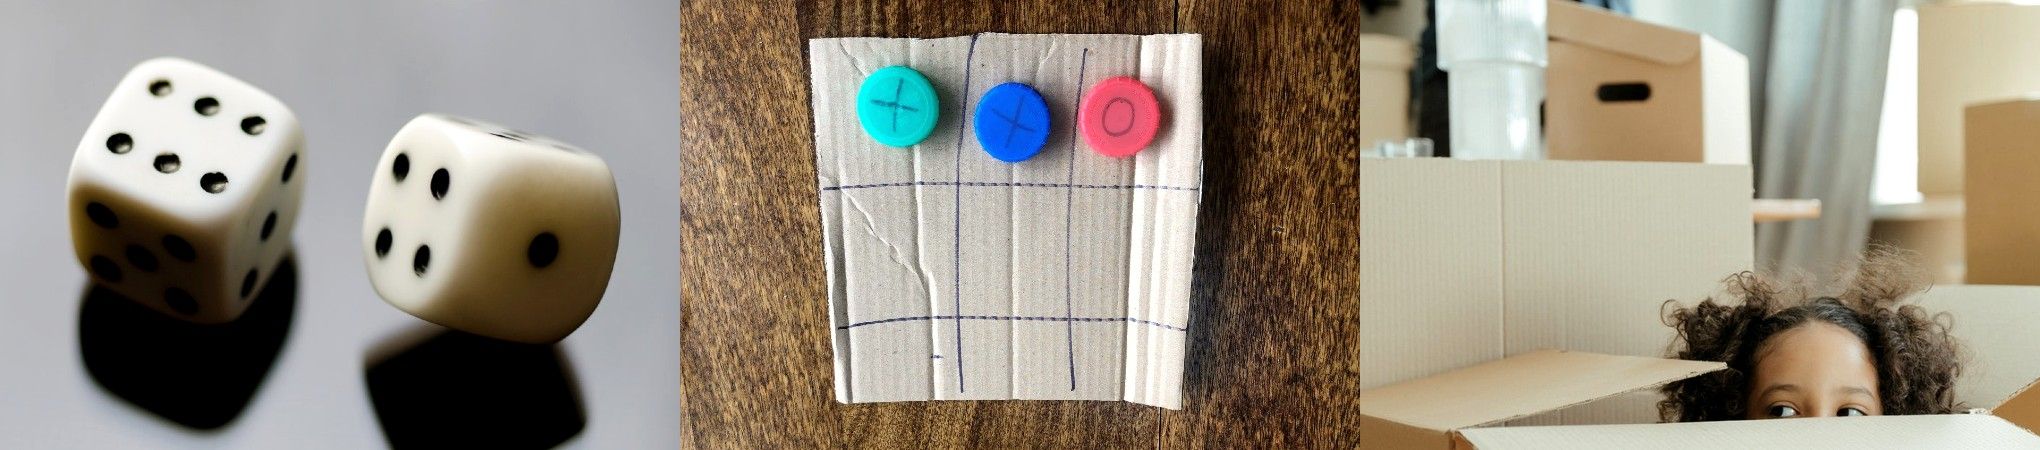 Make a simple board game